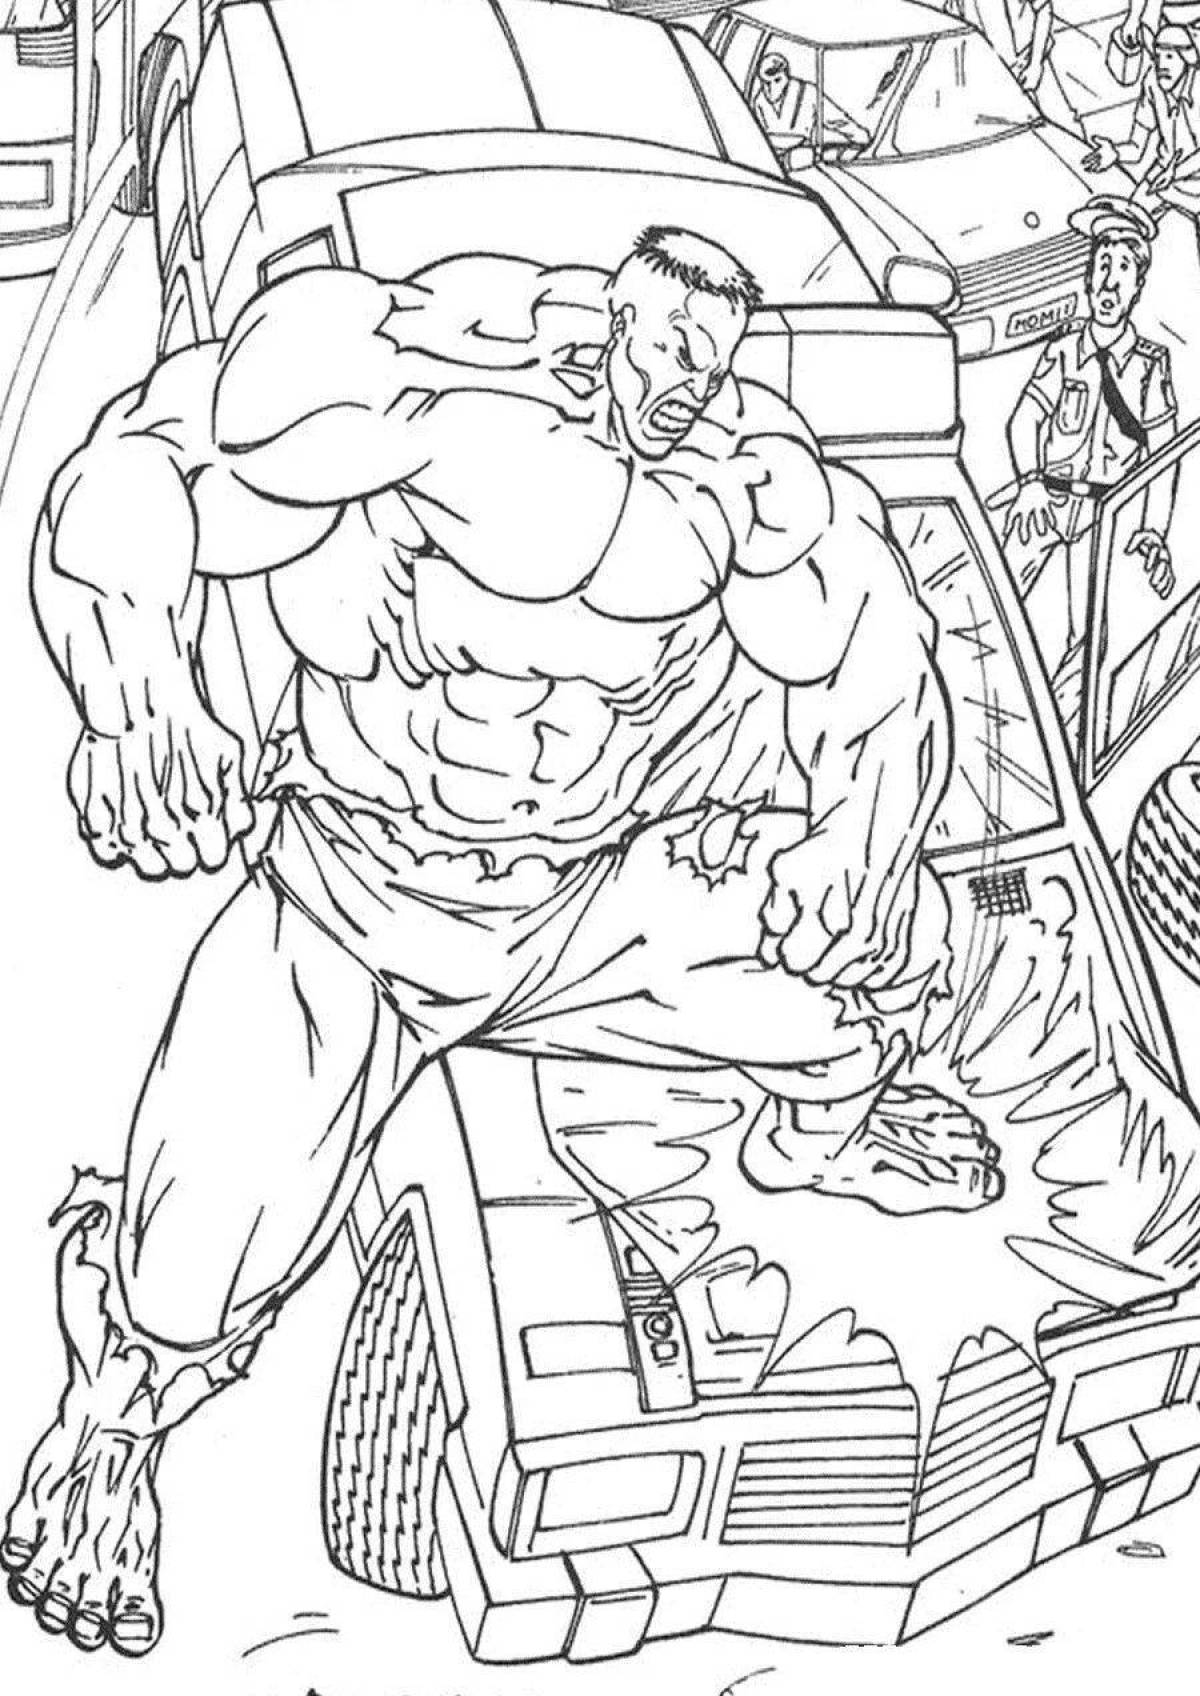 Amazing Hulk coloring page